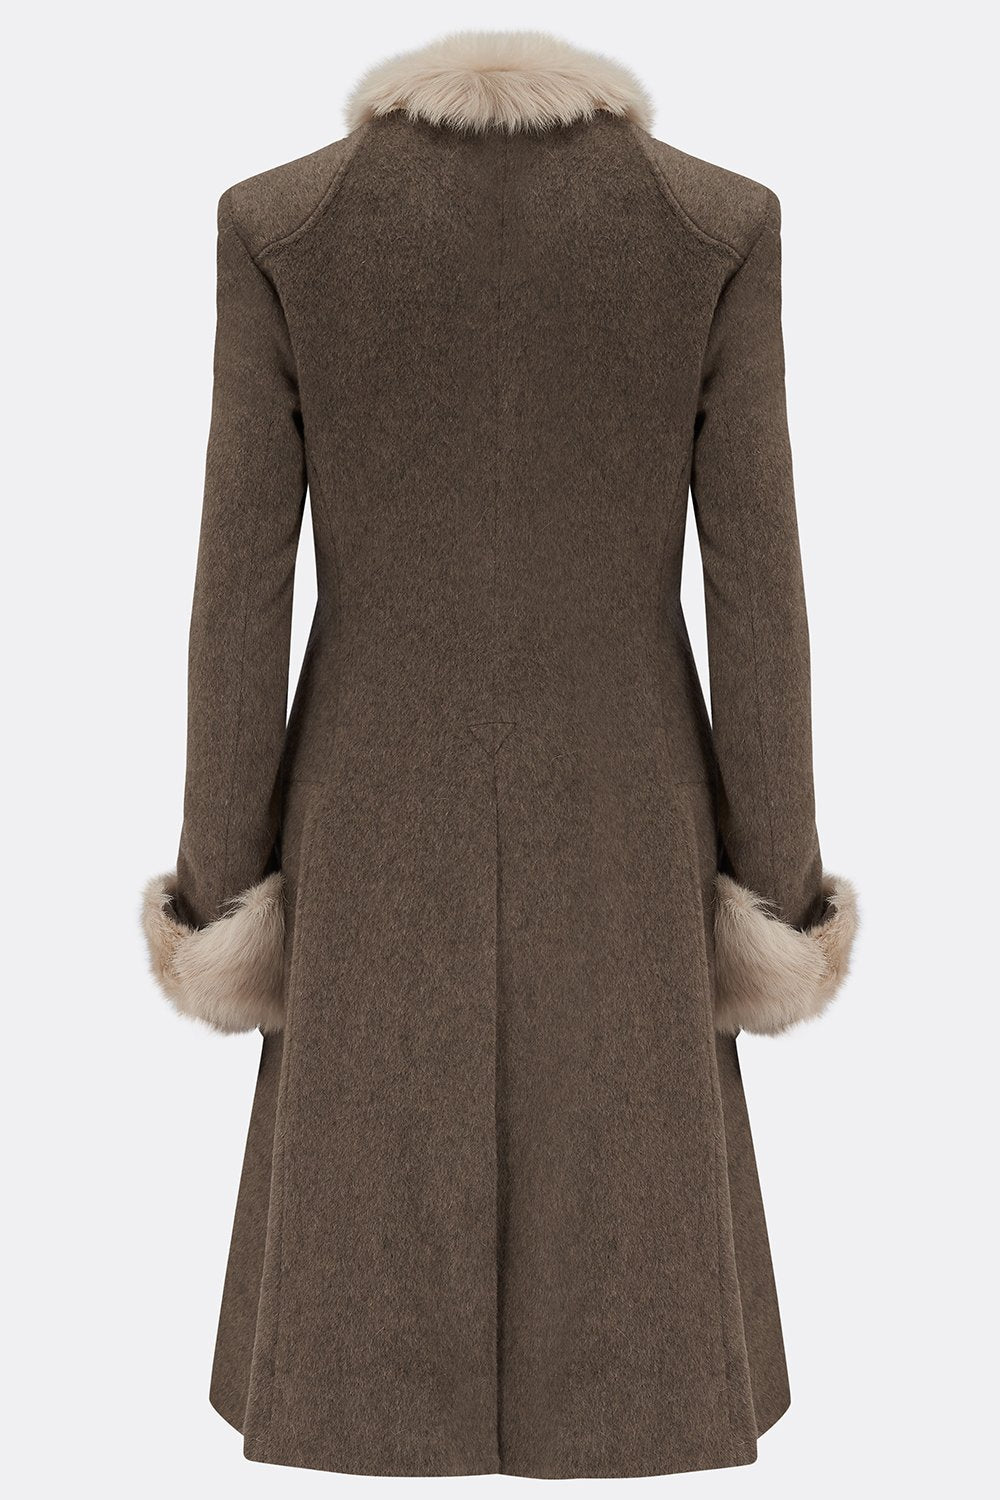 CUTPURSE COAT IN BEIGE ALPACA (made to order)-womenswear-A Child Of The Jago